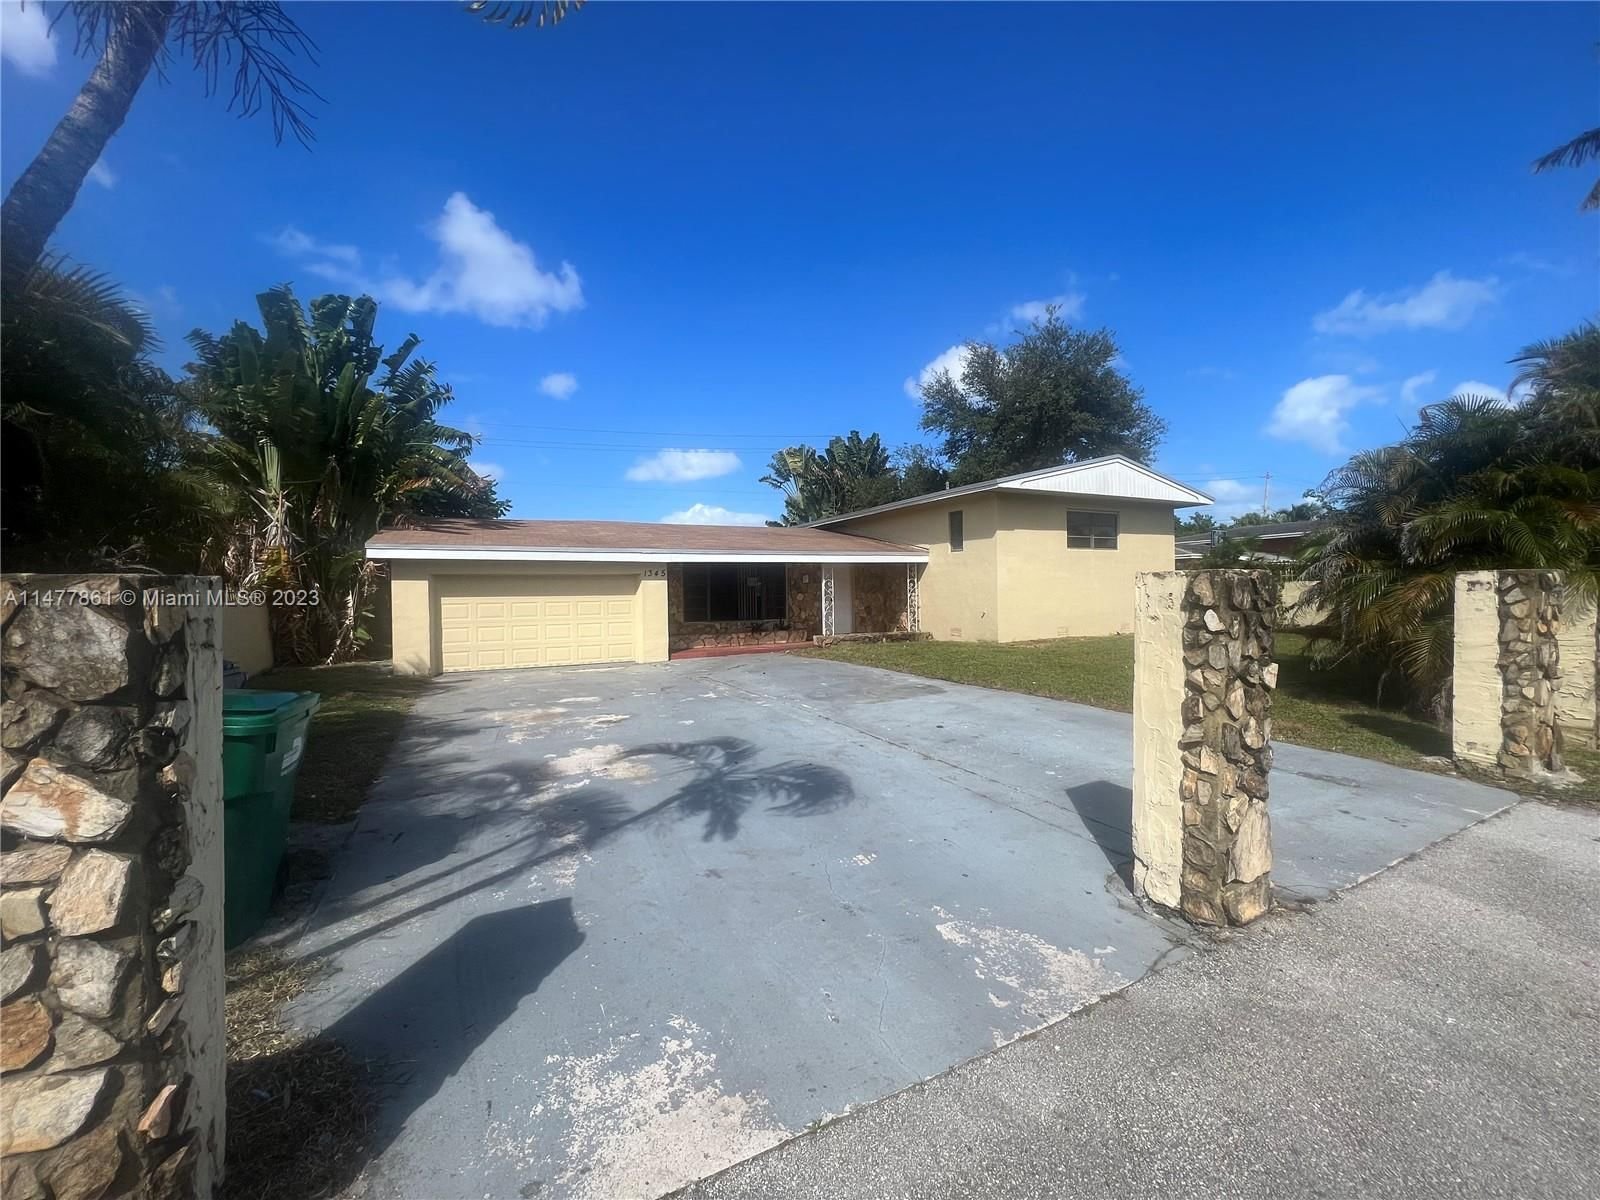 Real estate property located at 1345 204th Ter, Miami-Dade County, Miami, FL